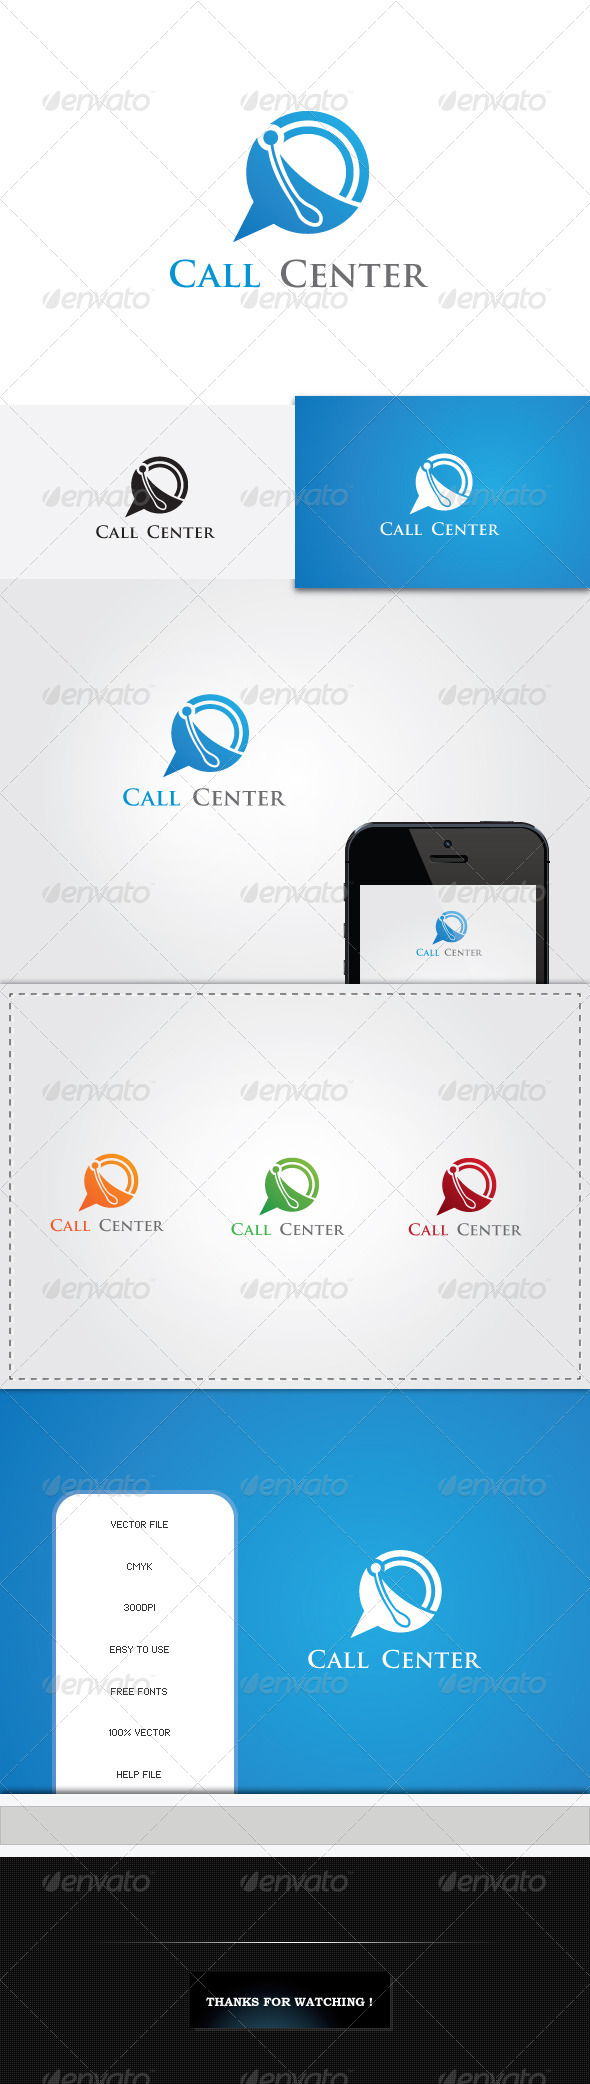 Call Center Inspiration Logo Template photo - 1